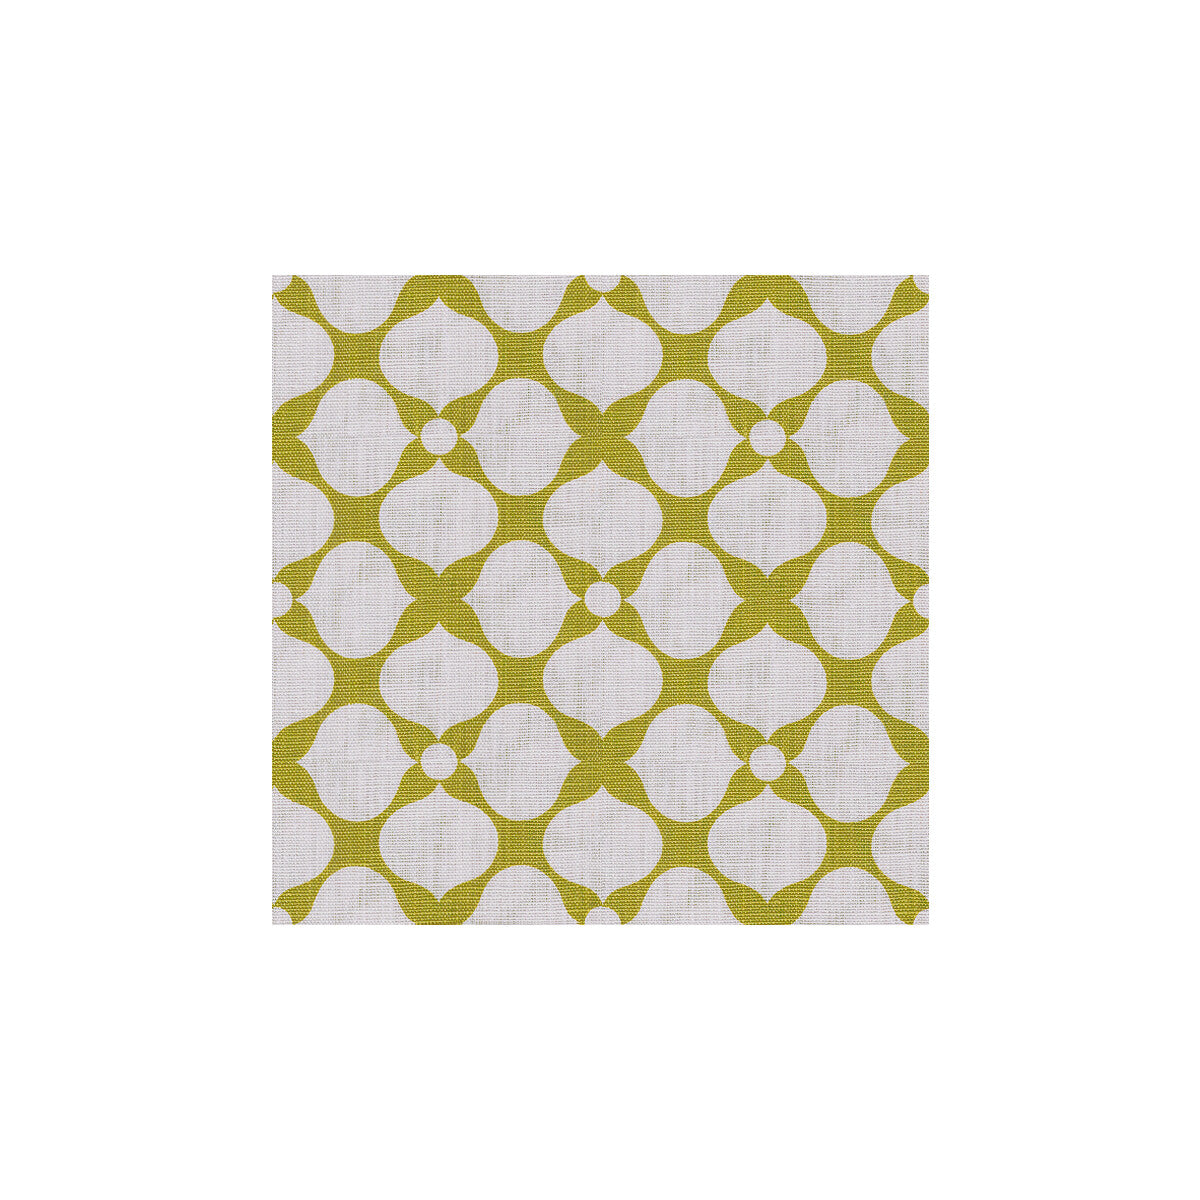 Santa Rosa fabric in pear color - pattern SANTA ROSA.3.0 - by Kravet Basics in the Jonathan Adler Utopia collection